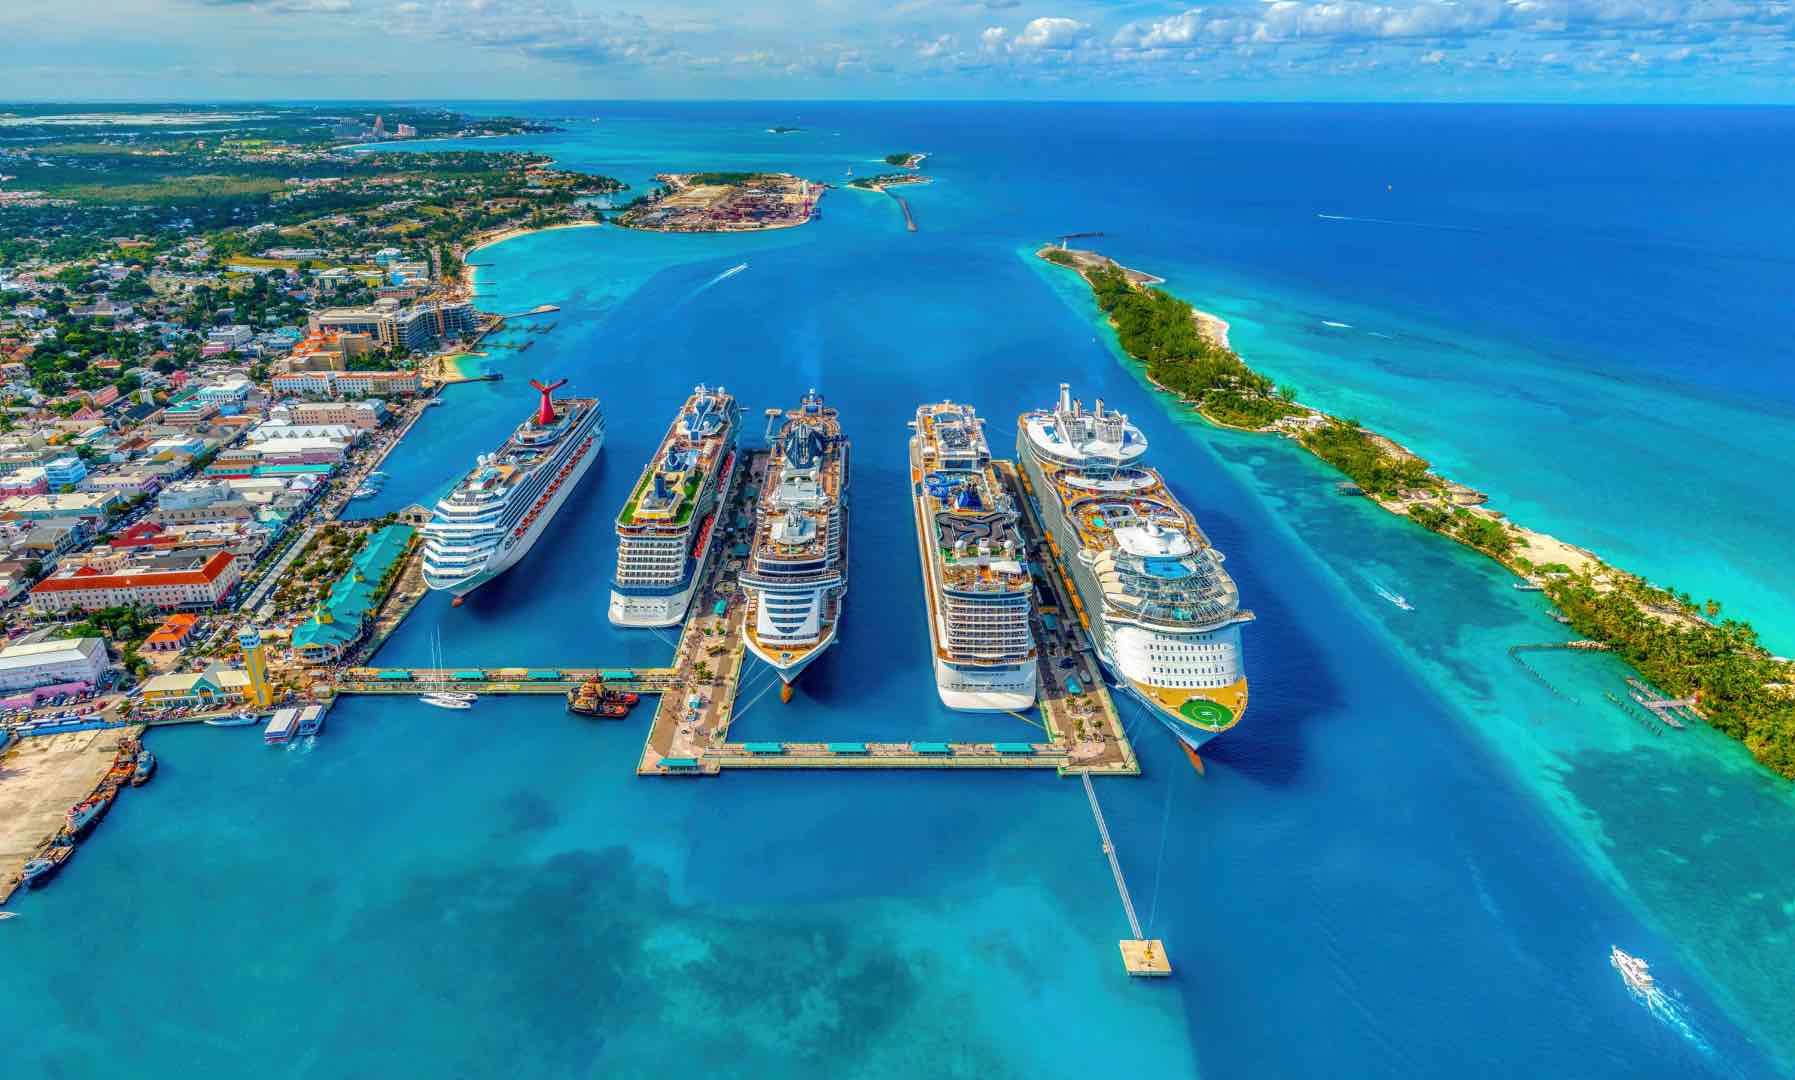 Cruise ships in the Bahamas.